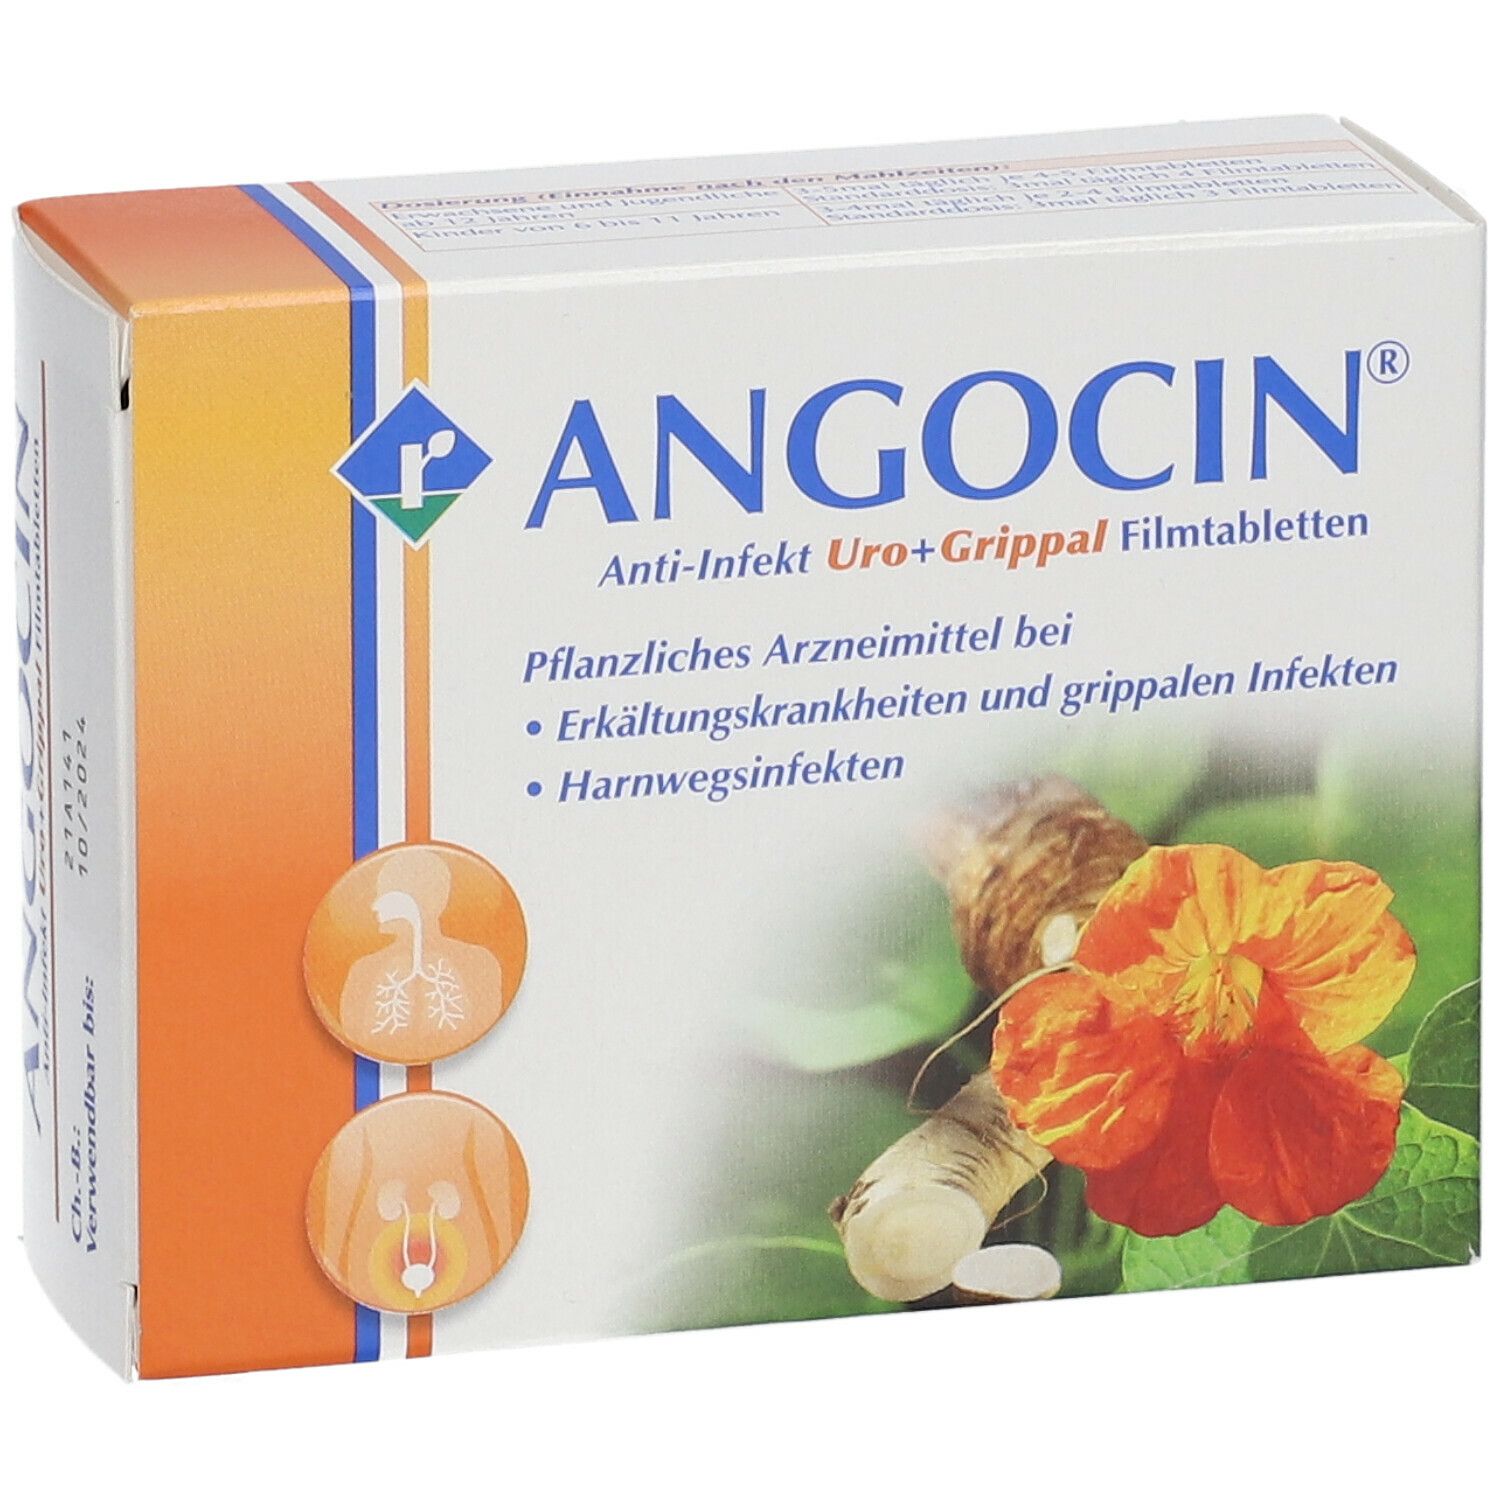 ANGOCIN® Anti-Infekt Uro+Grippal